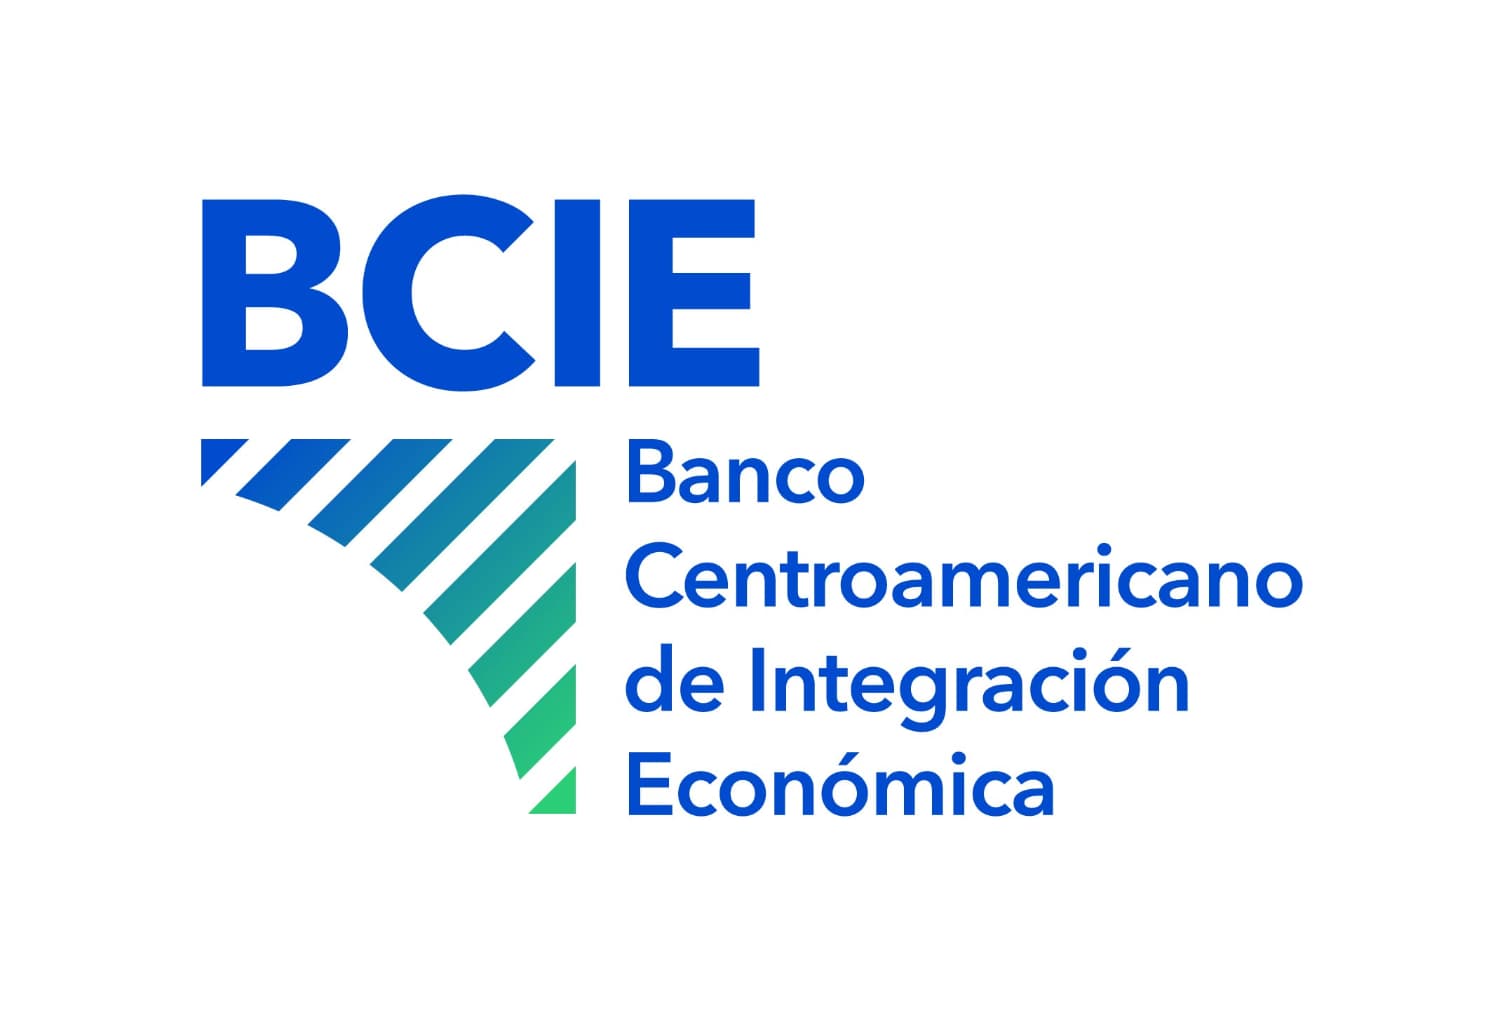 Banco Centroamericano de Integración Económica BCIE